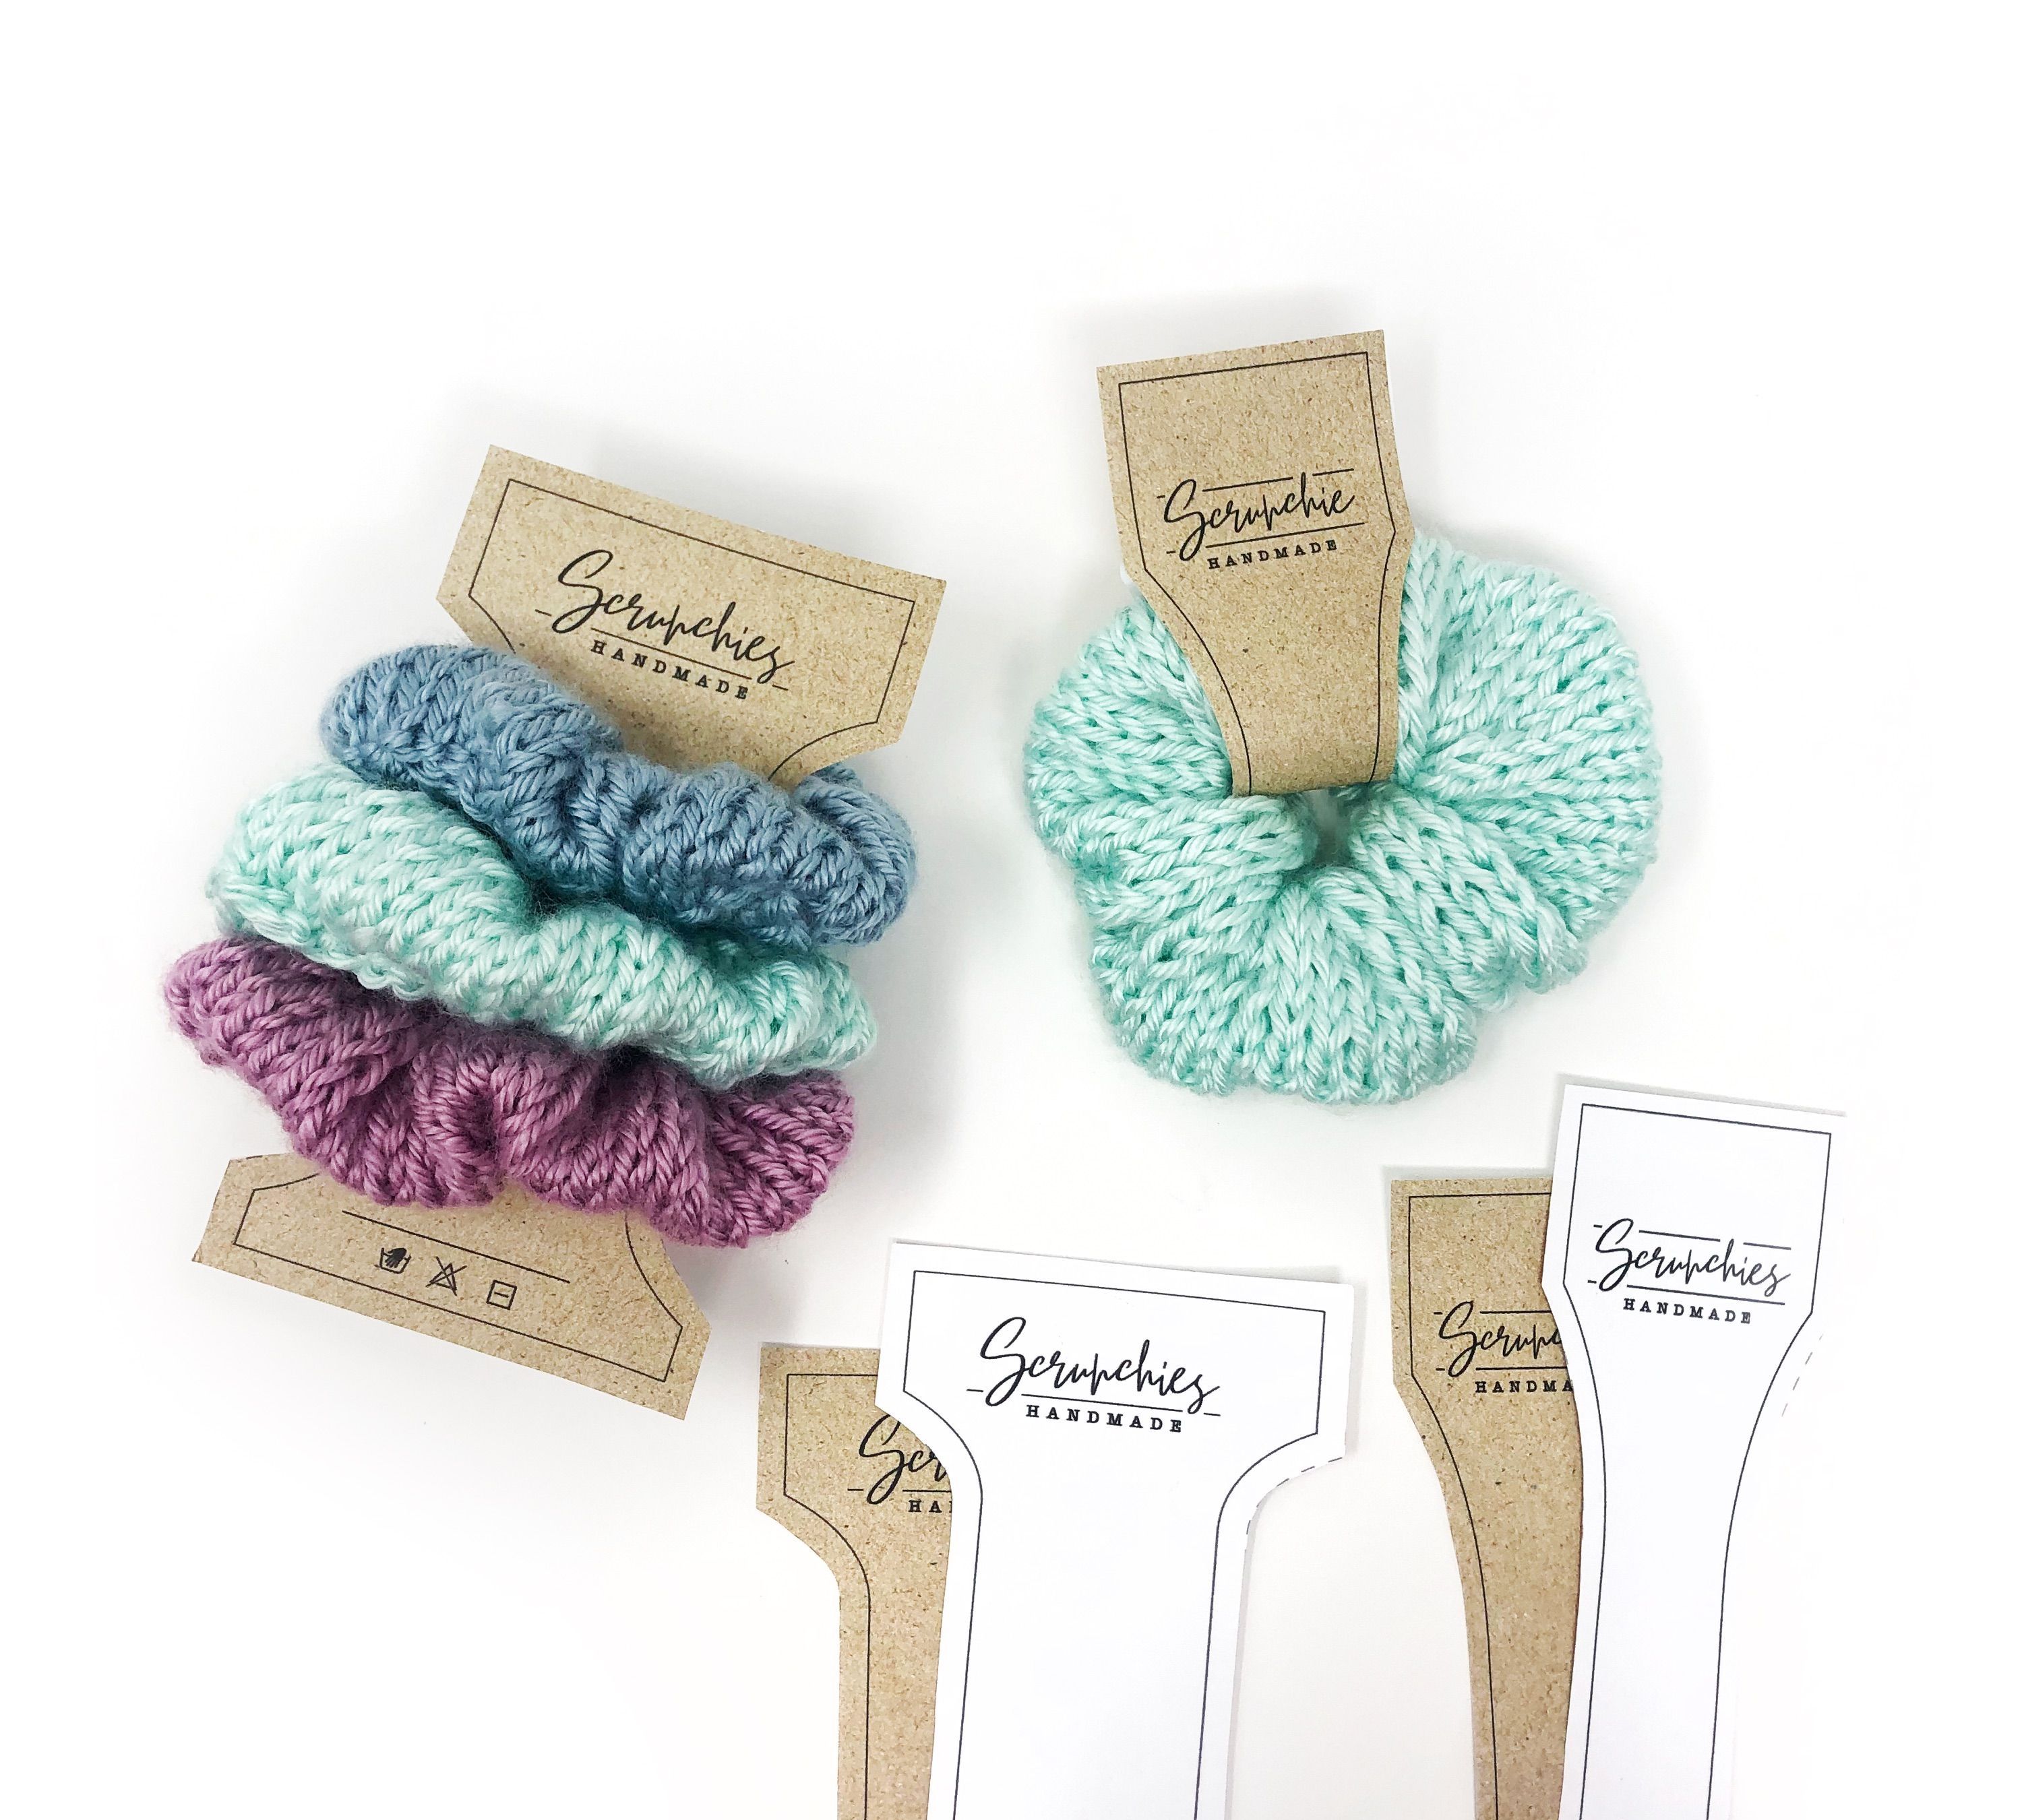 Printable tags for handmade scrunchies -   diy Scrunchie packaging